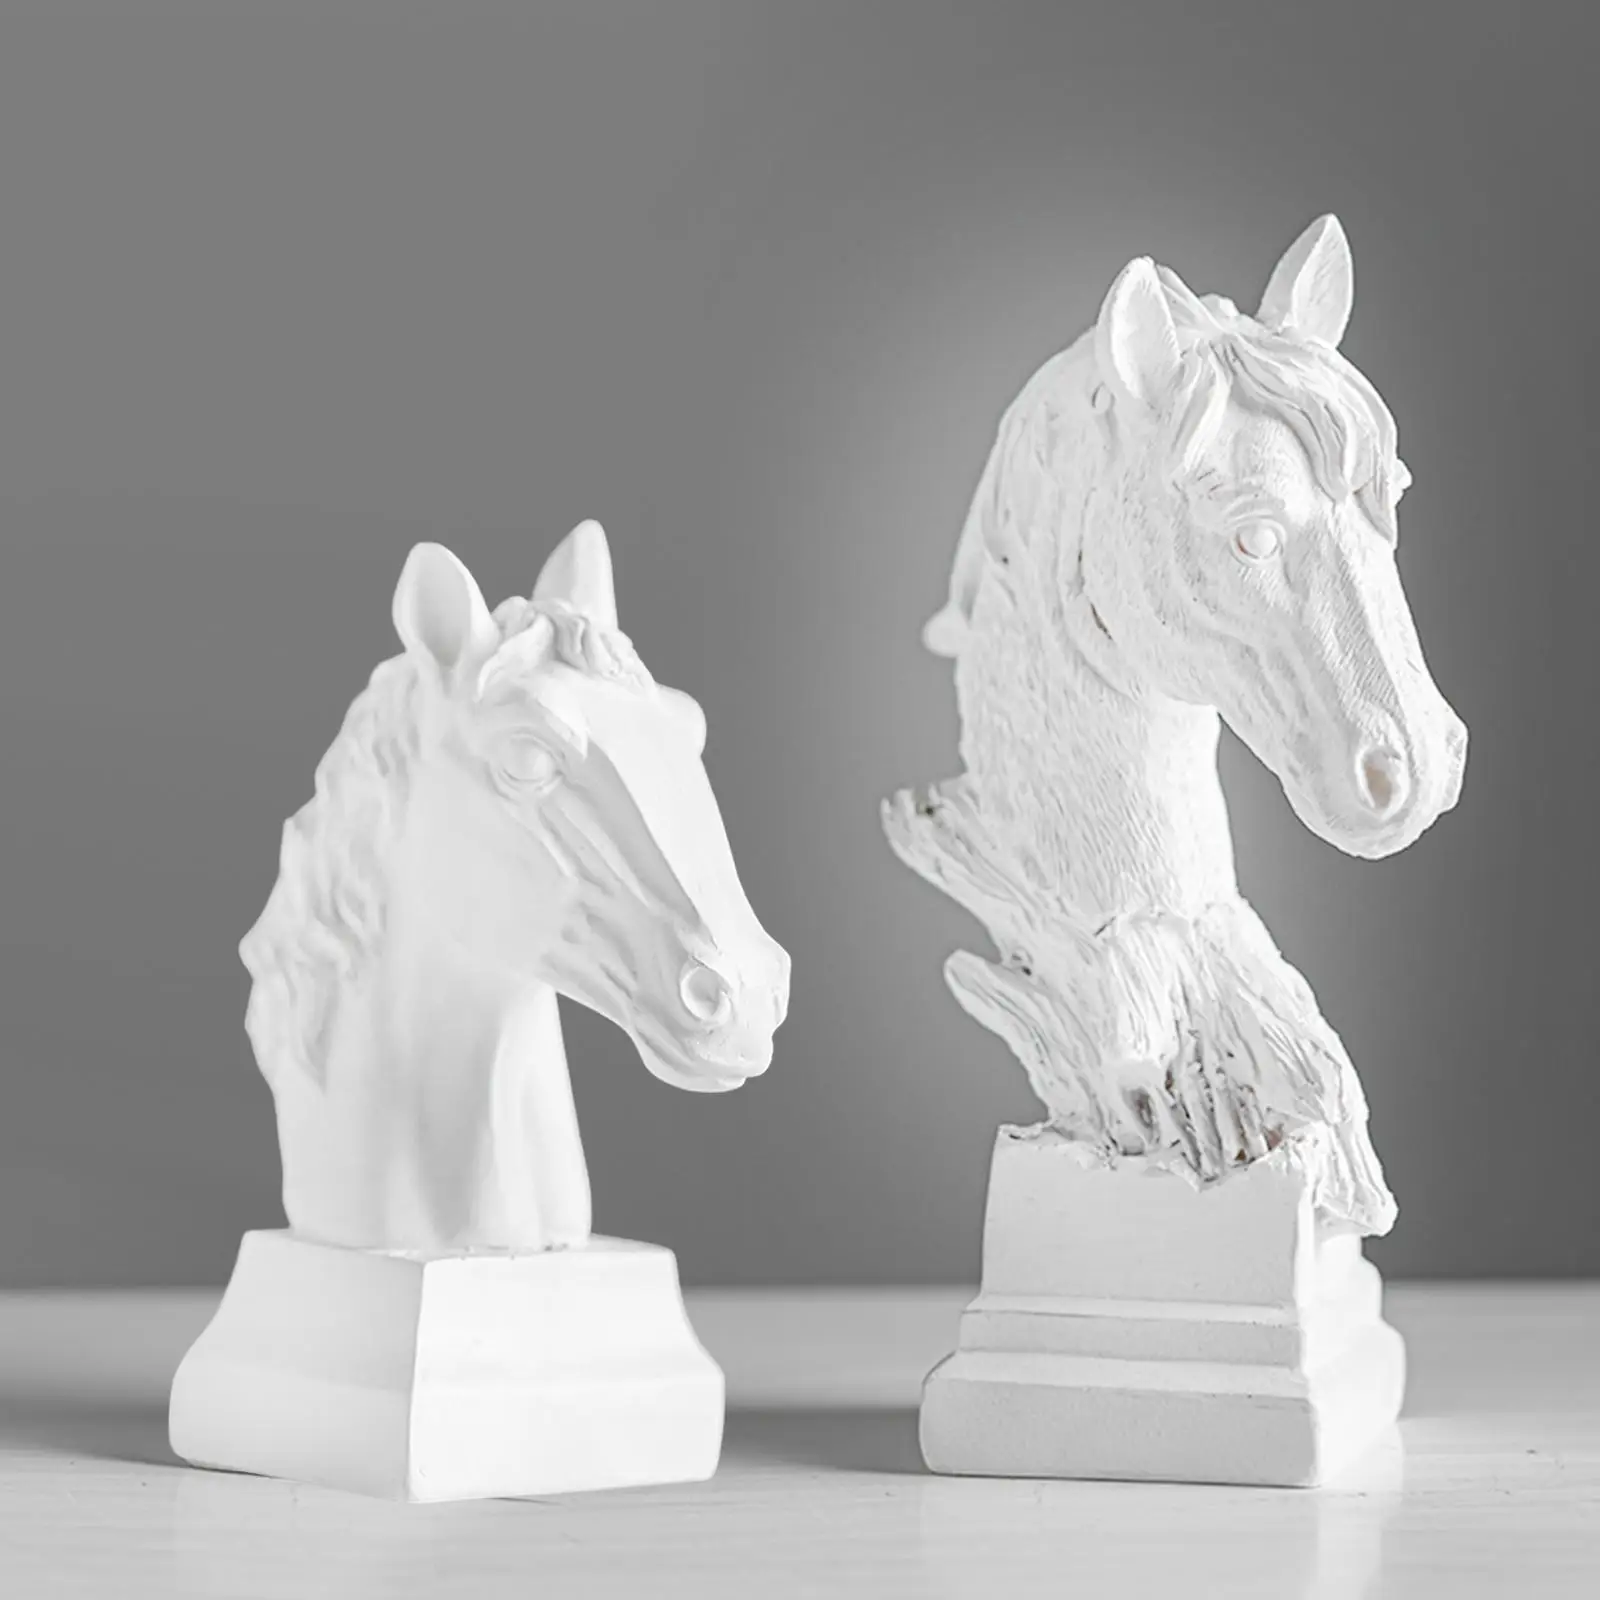 Horse Head Statue Decoration, Resin Figurines, 3D Horse Sculpture for Shelf